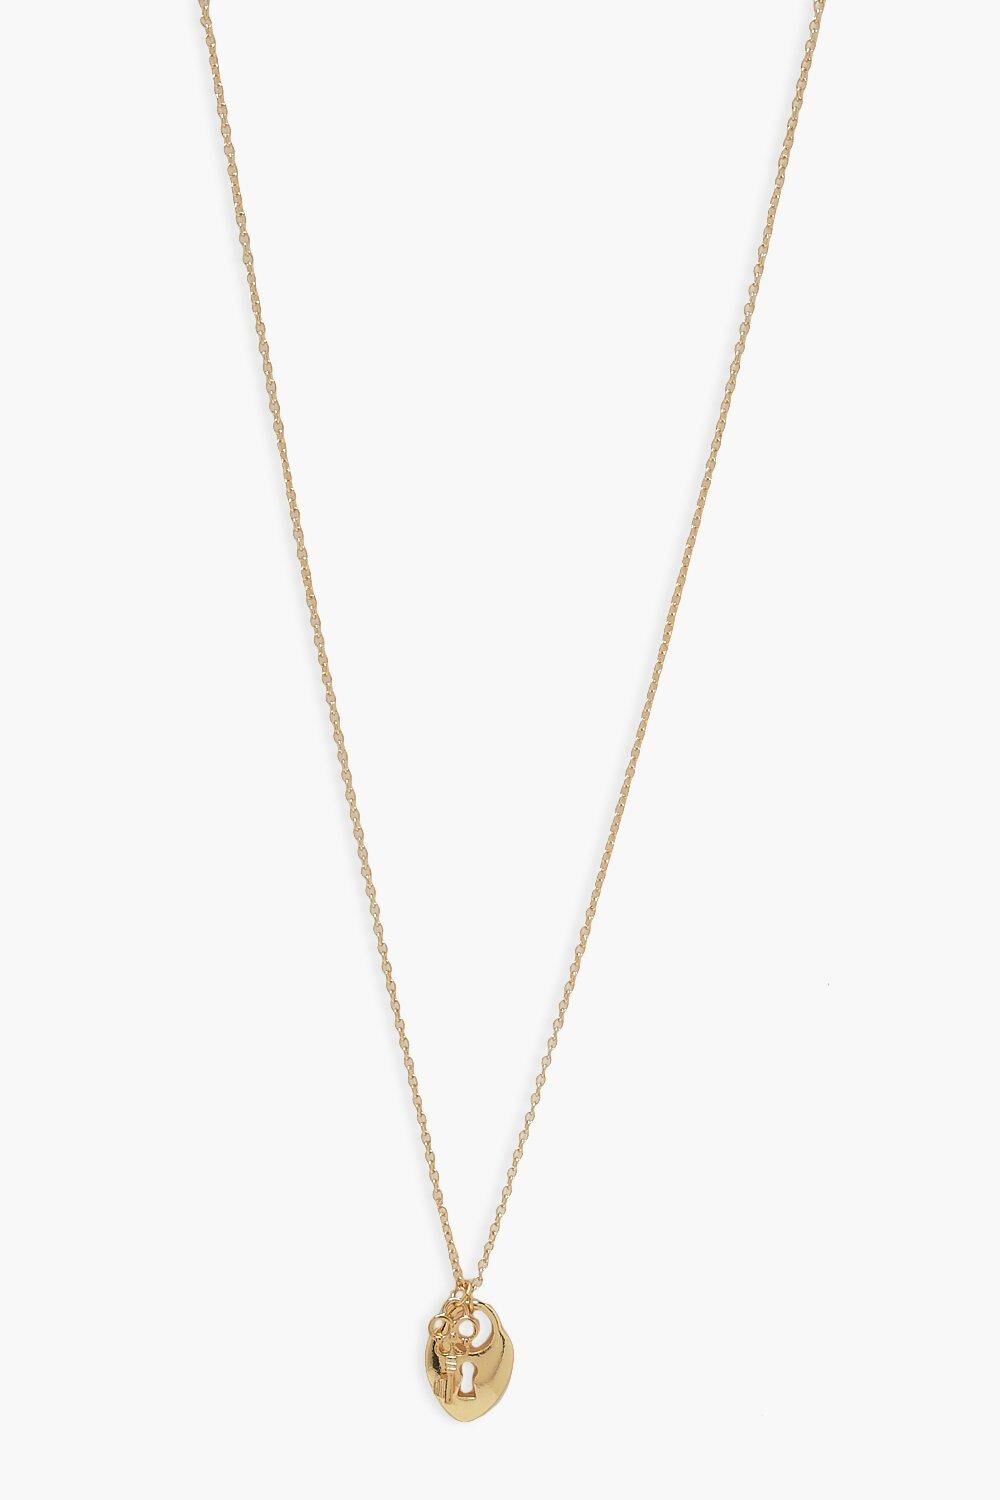 Boohoo Simple Heart Shape Padlock Key Necklace- Gold  - Size: ONE SIZE